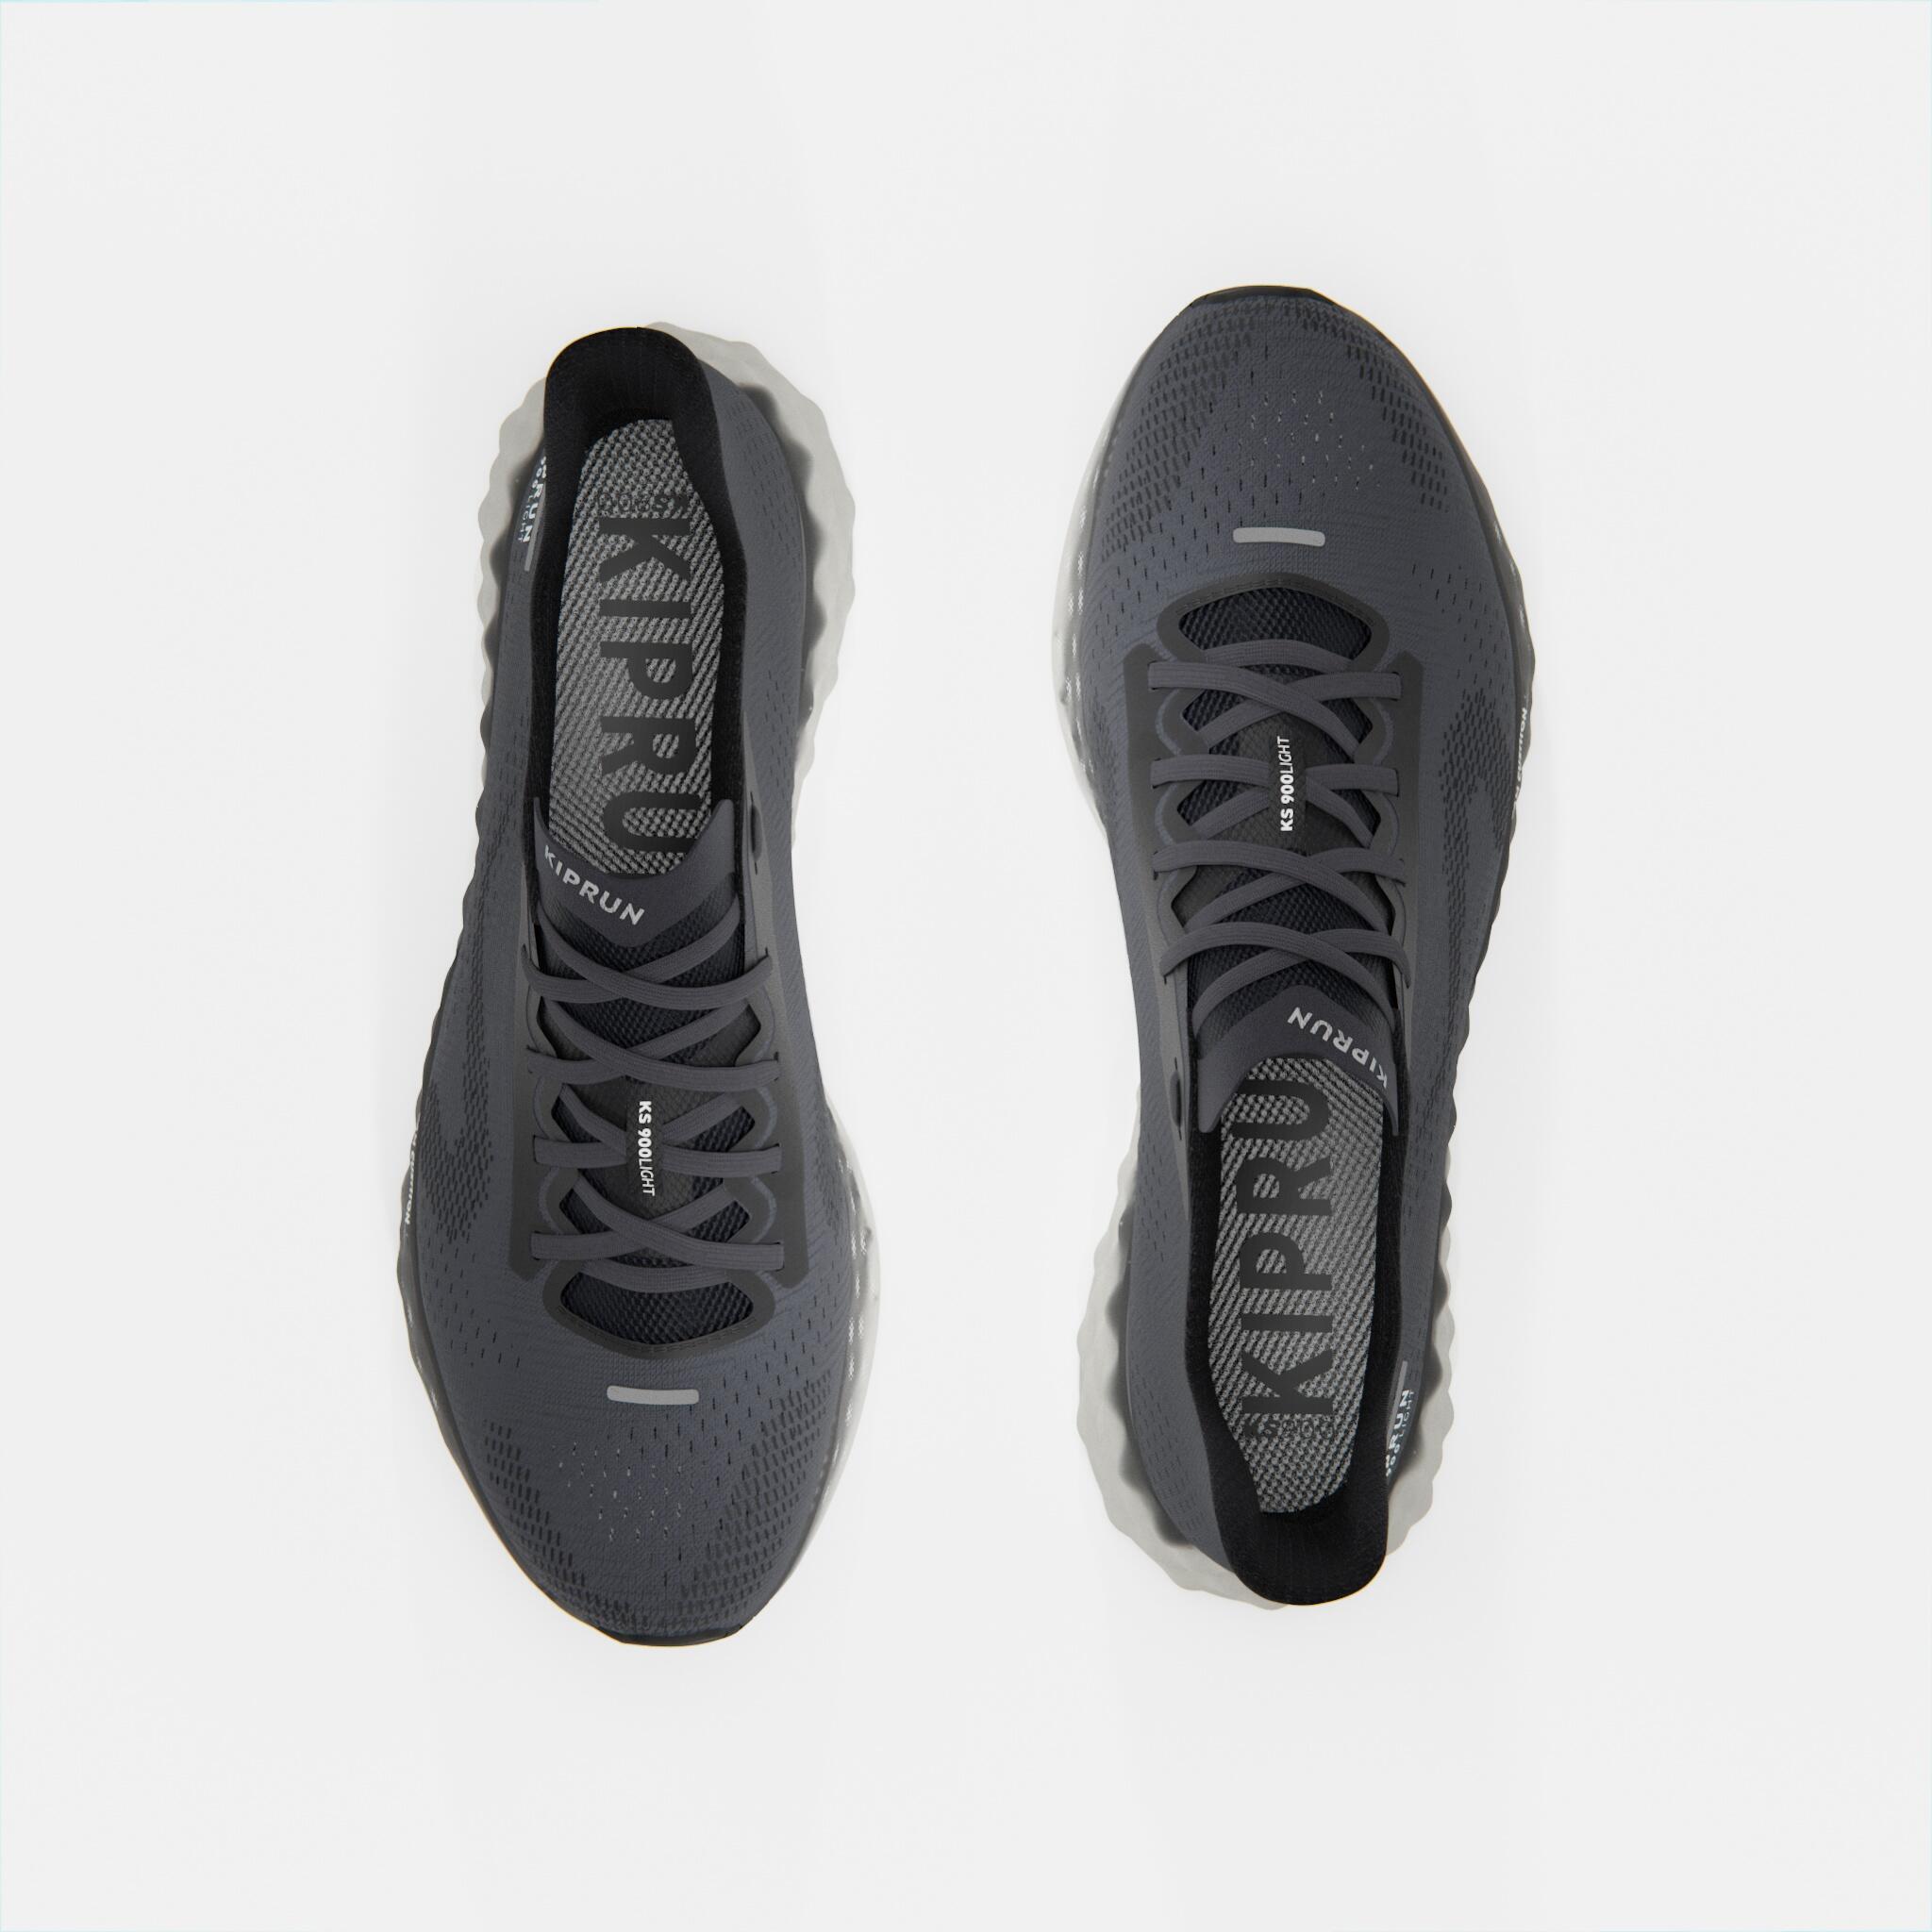 KIPRUN KS900 Light men's running shoes - dark grey 8/13